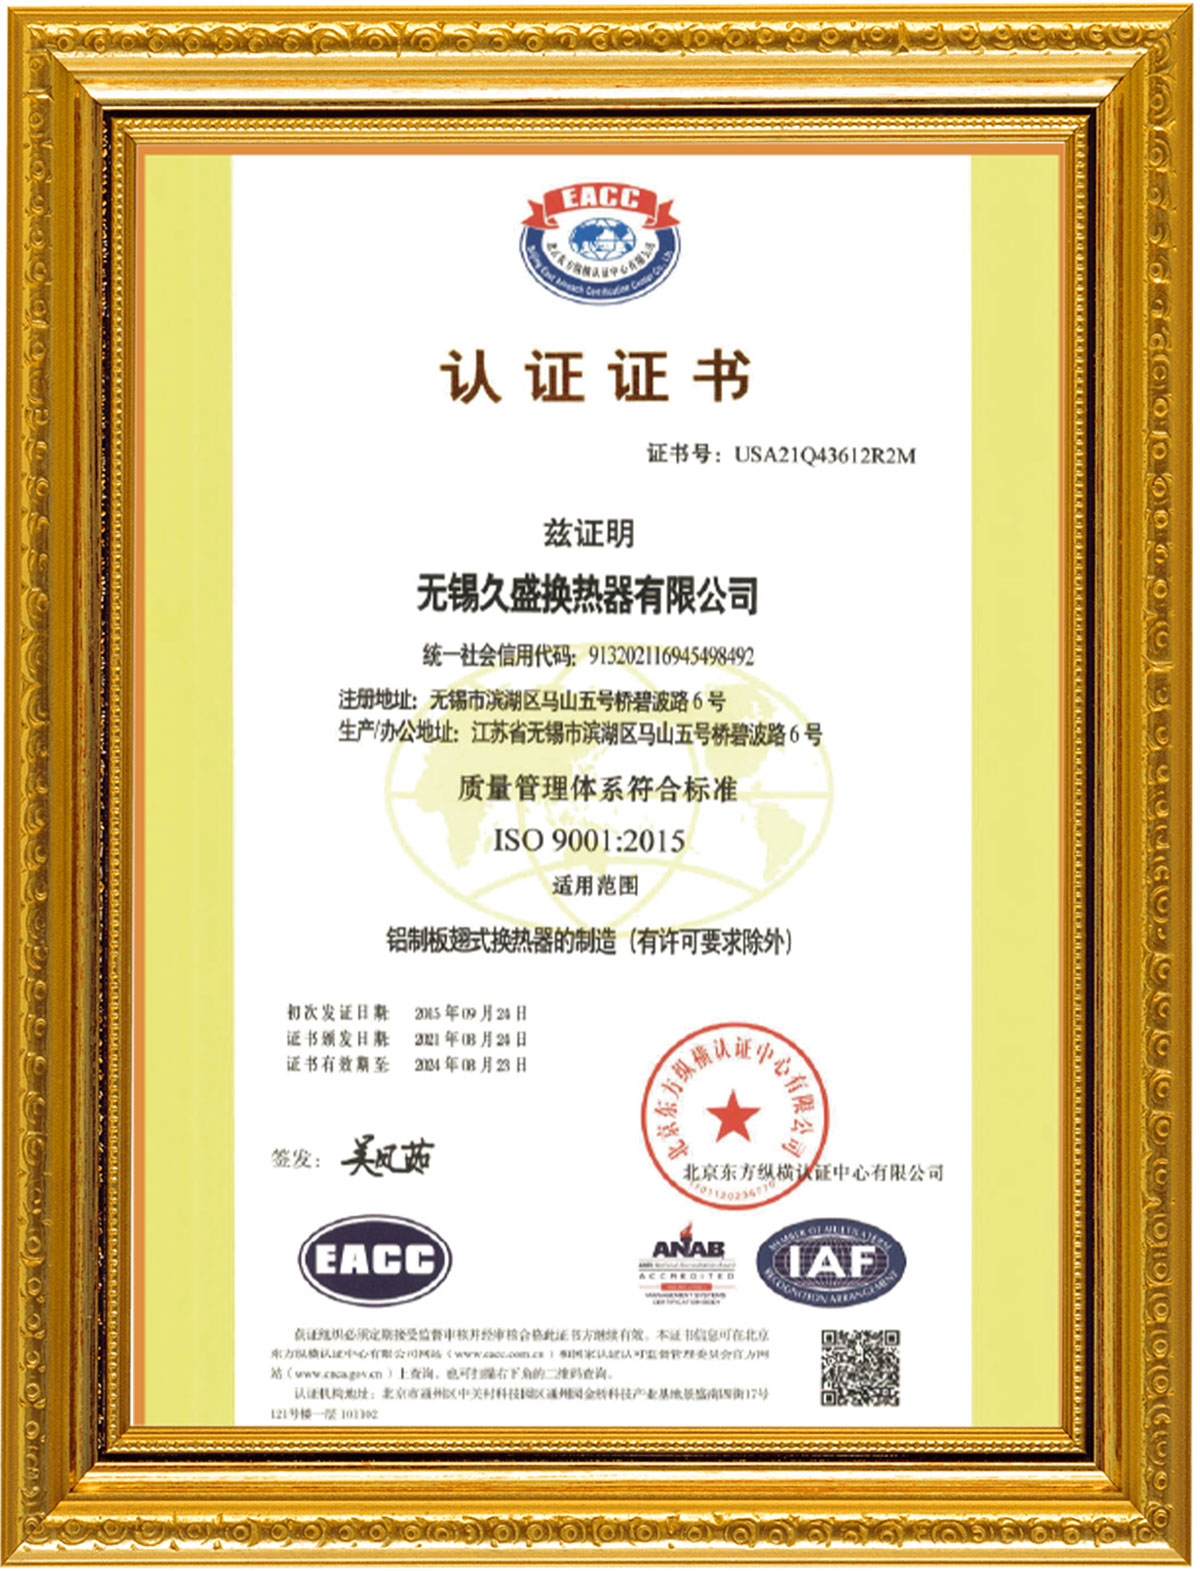 certificate10taj